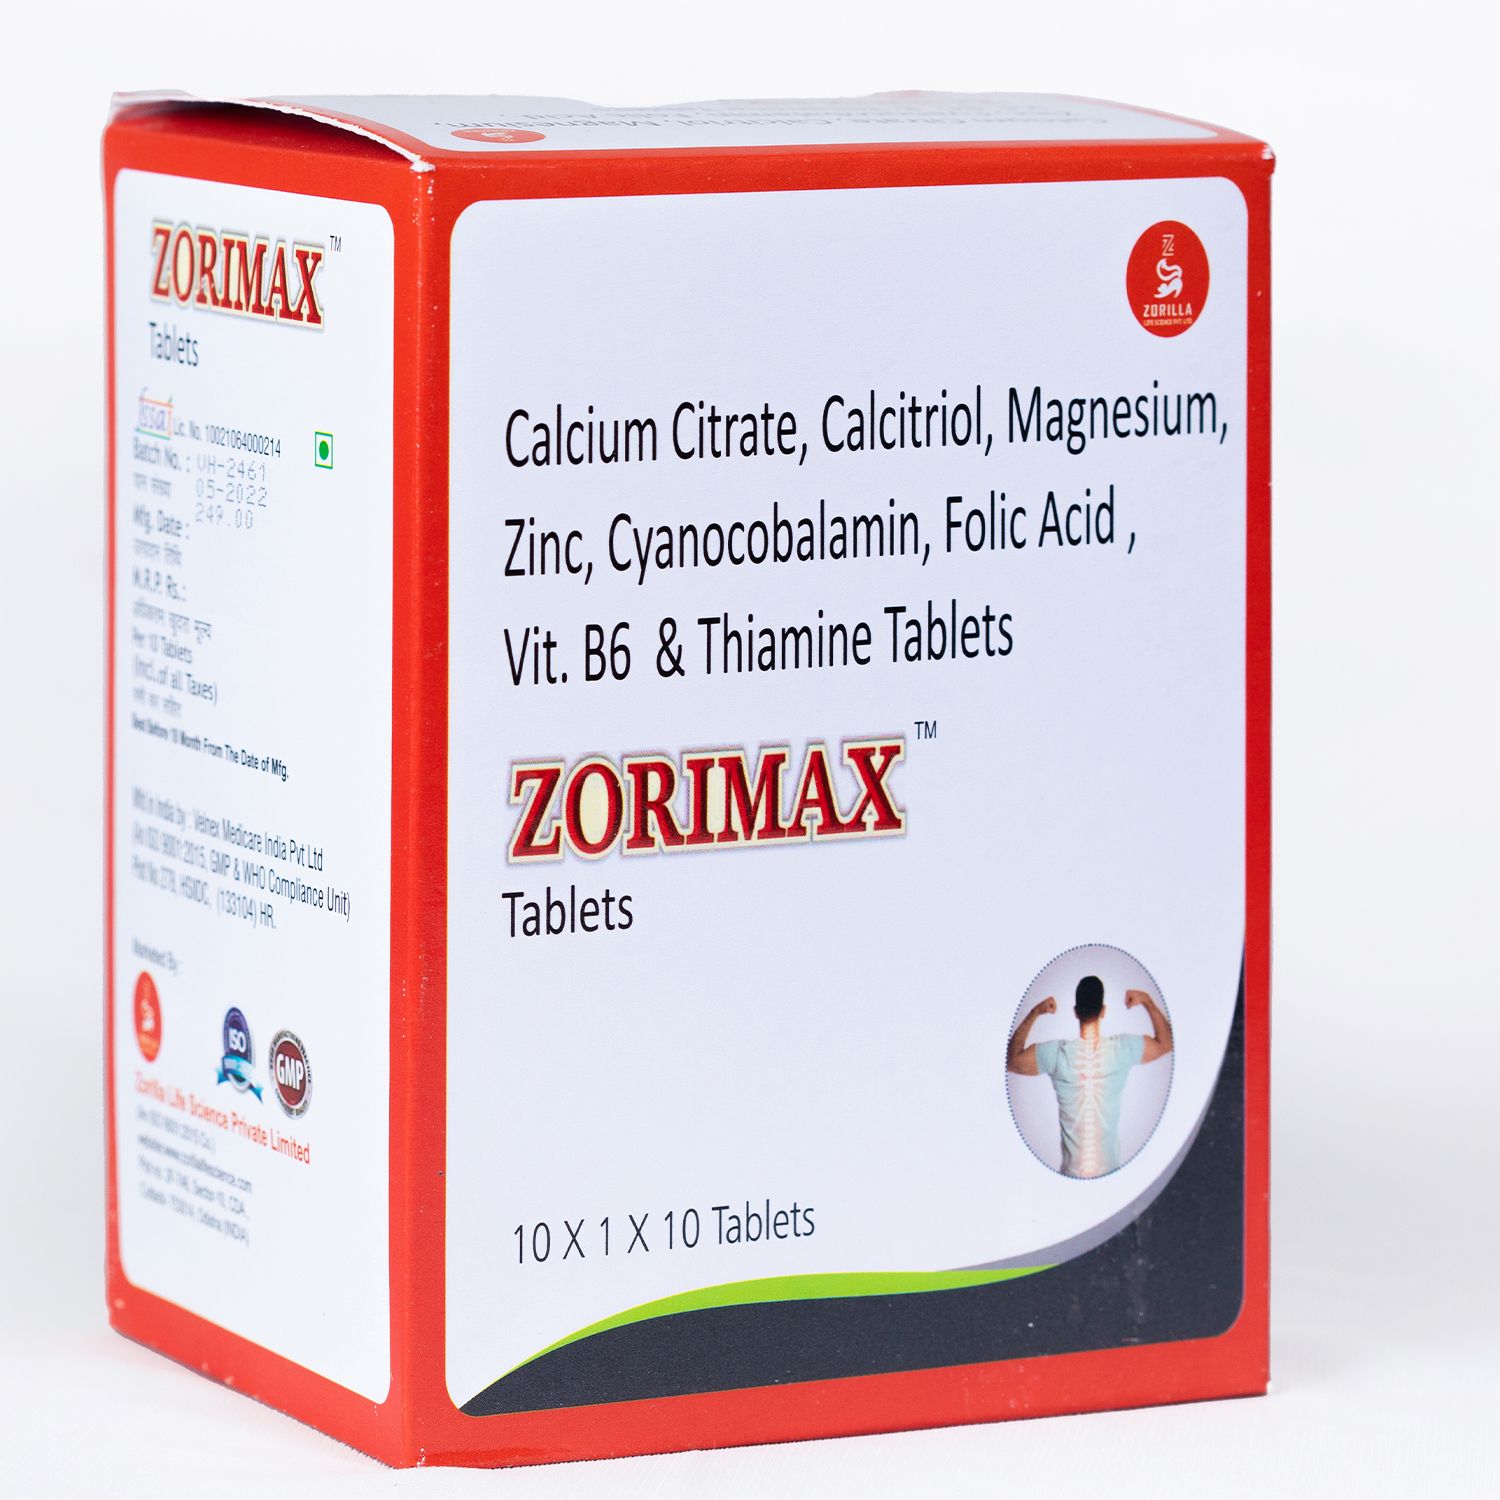 Buy Zorimax Tablets at Best Price Online